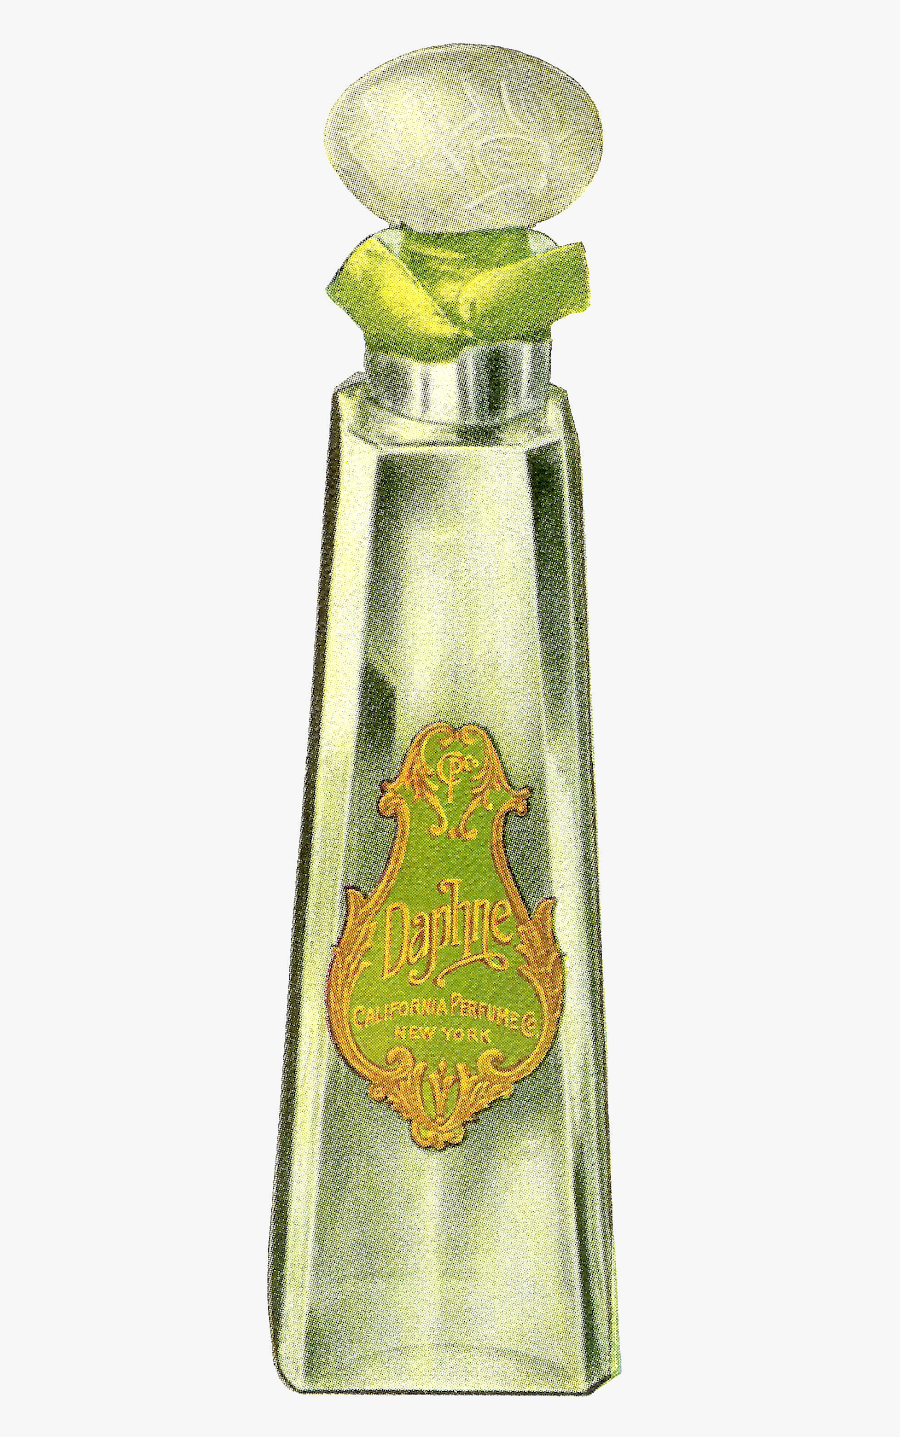 Perfume, Transparent Clipart